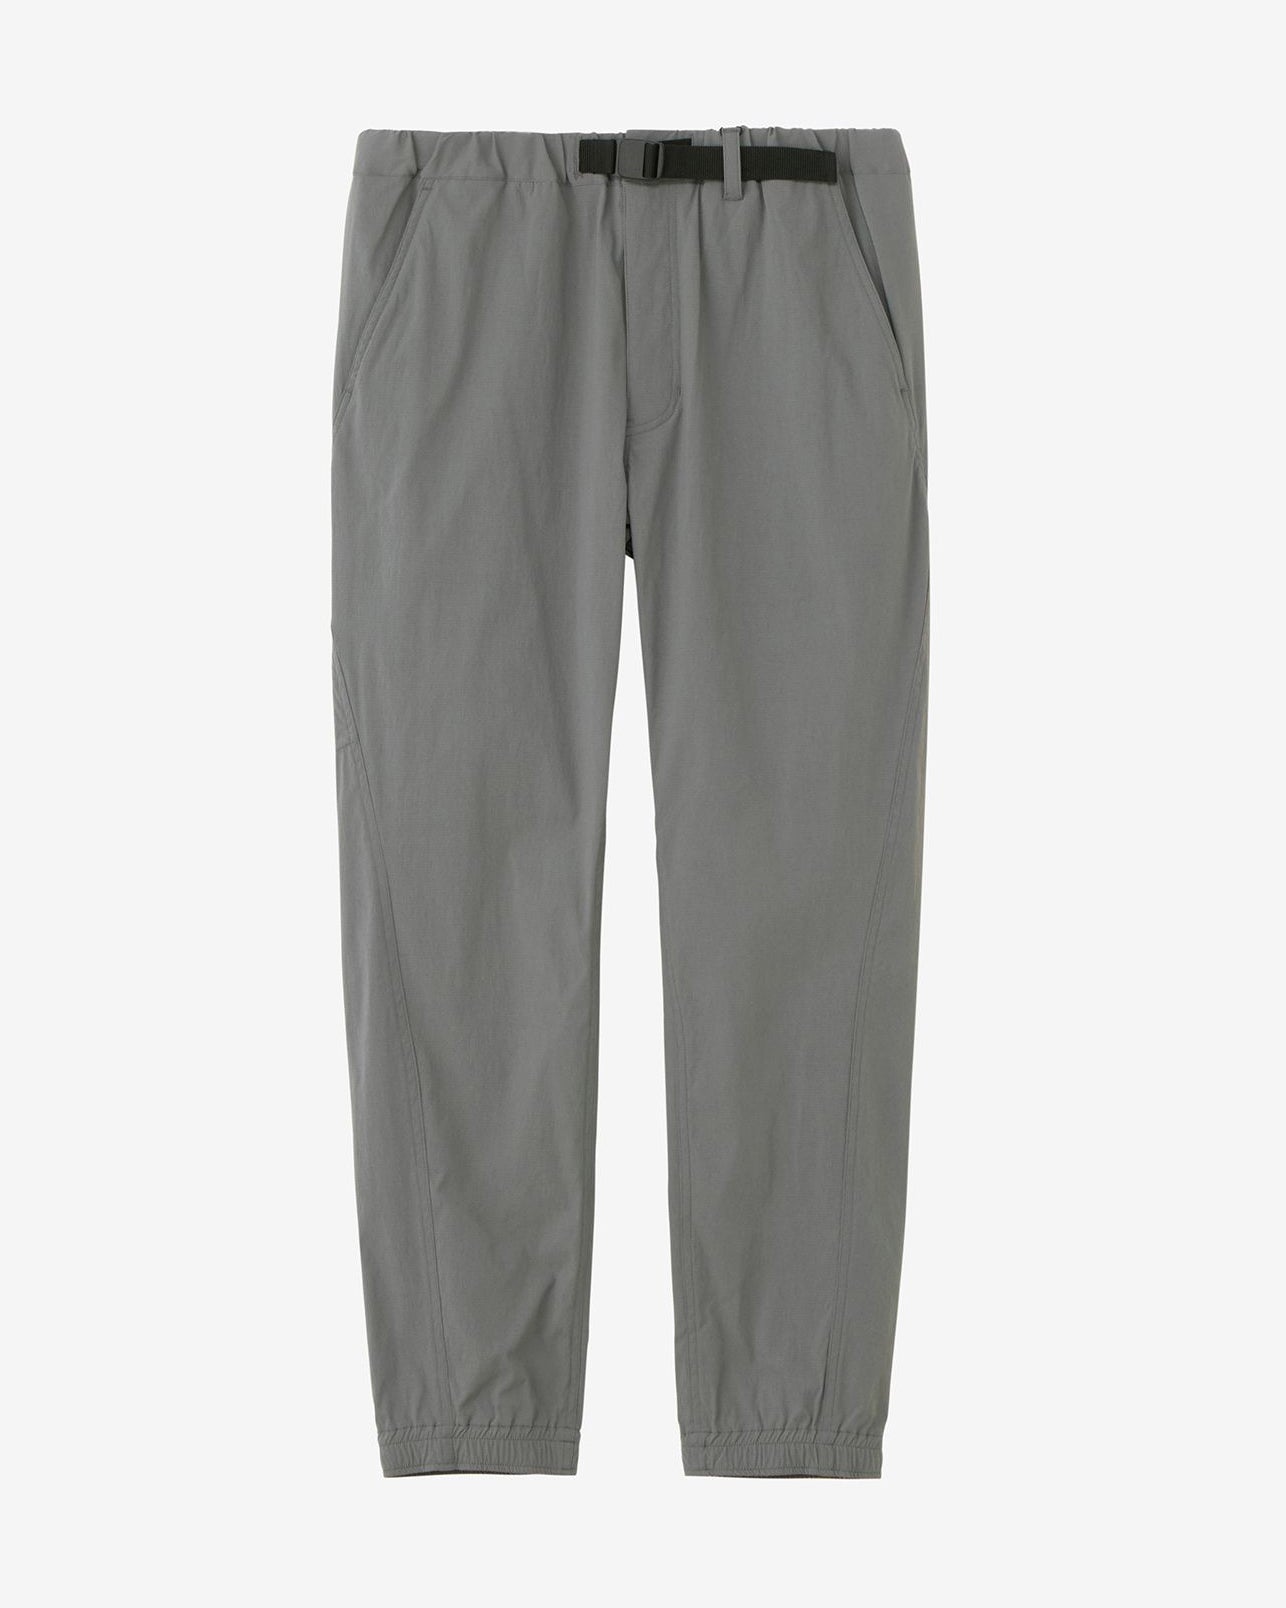 Cordura Stretch Pants - Foliage Grey